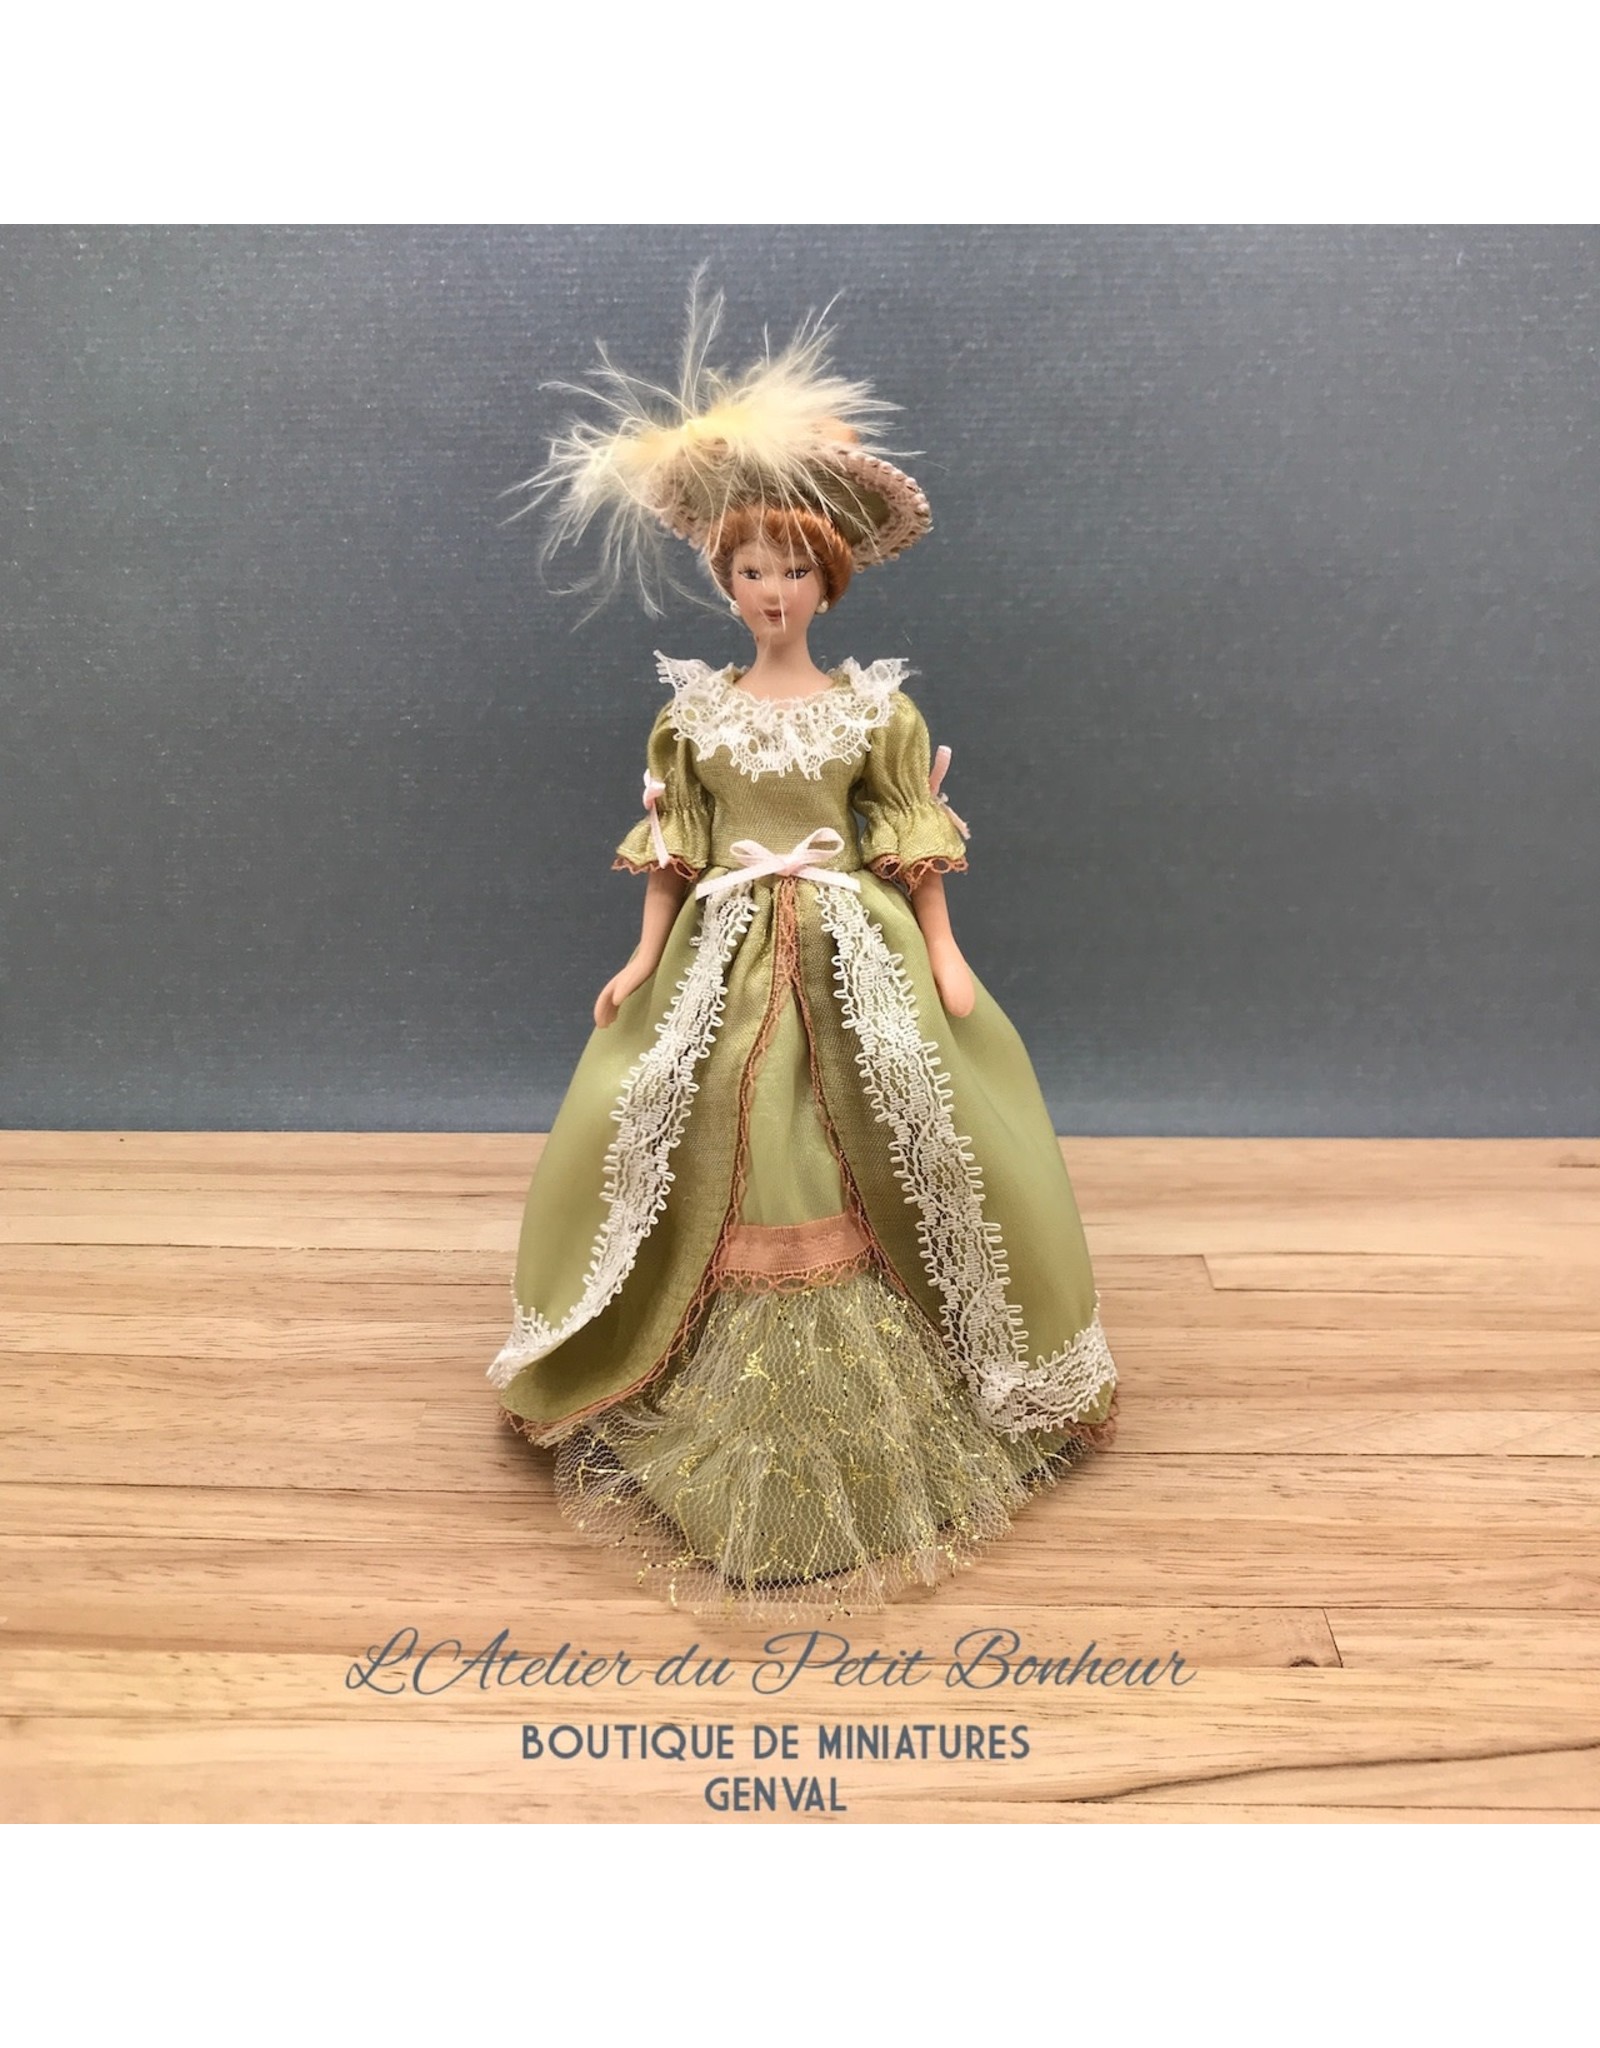 Femme victorienne miniature 1:12